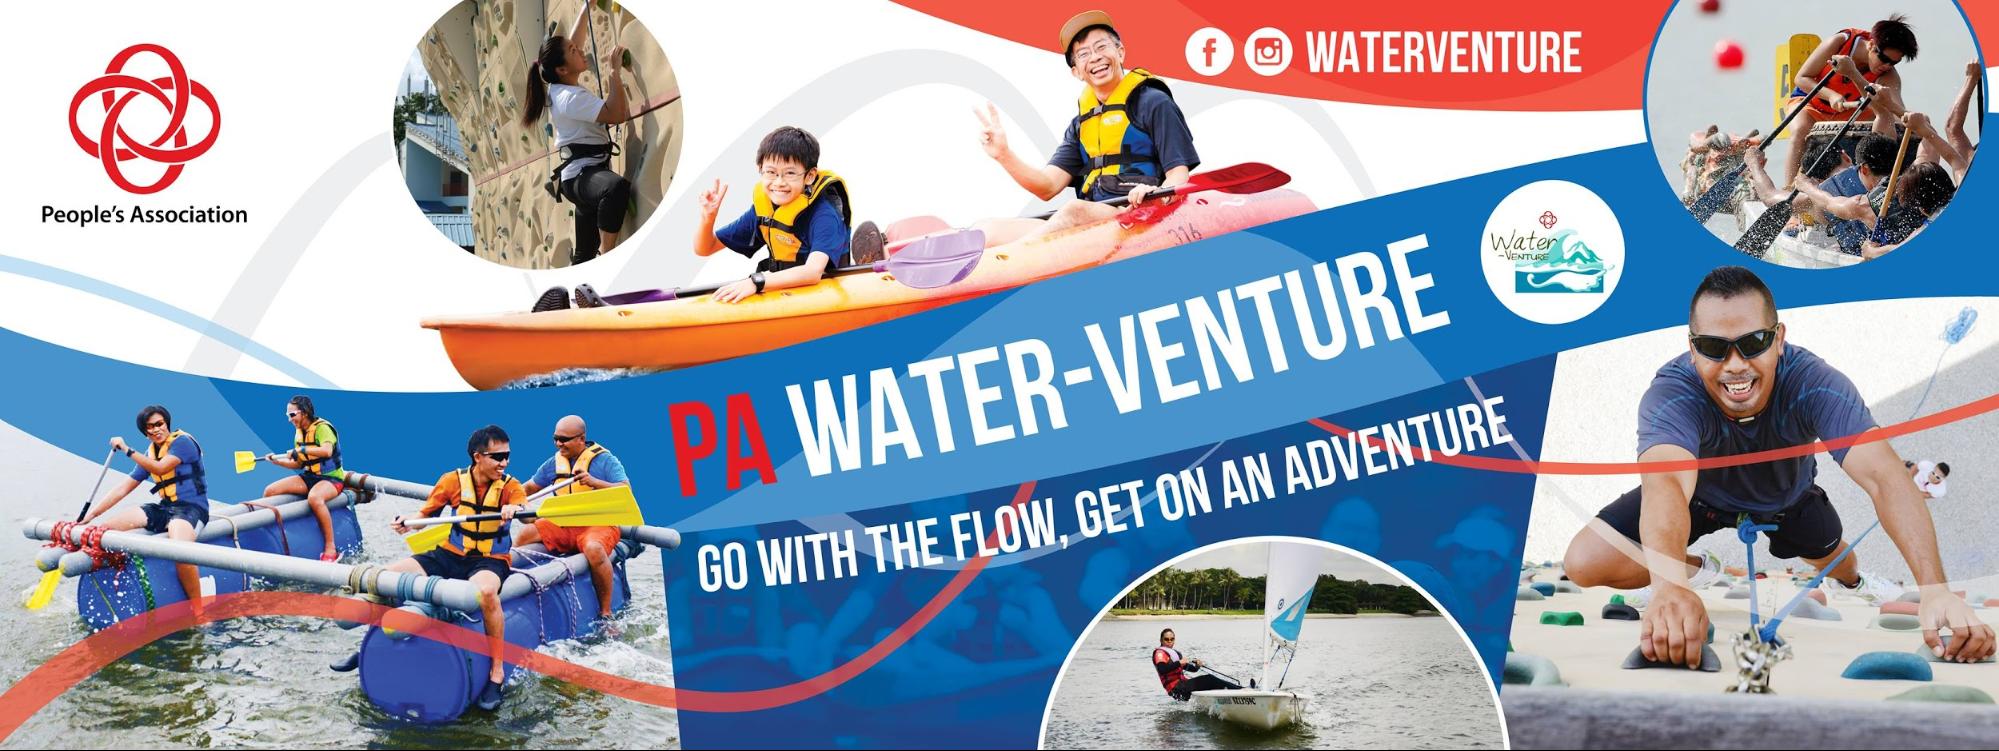 pa water venture banner